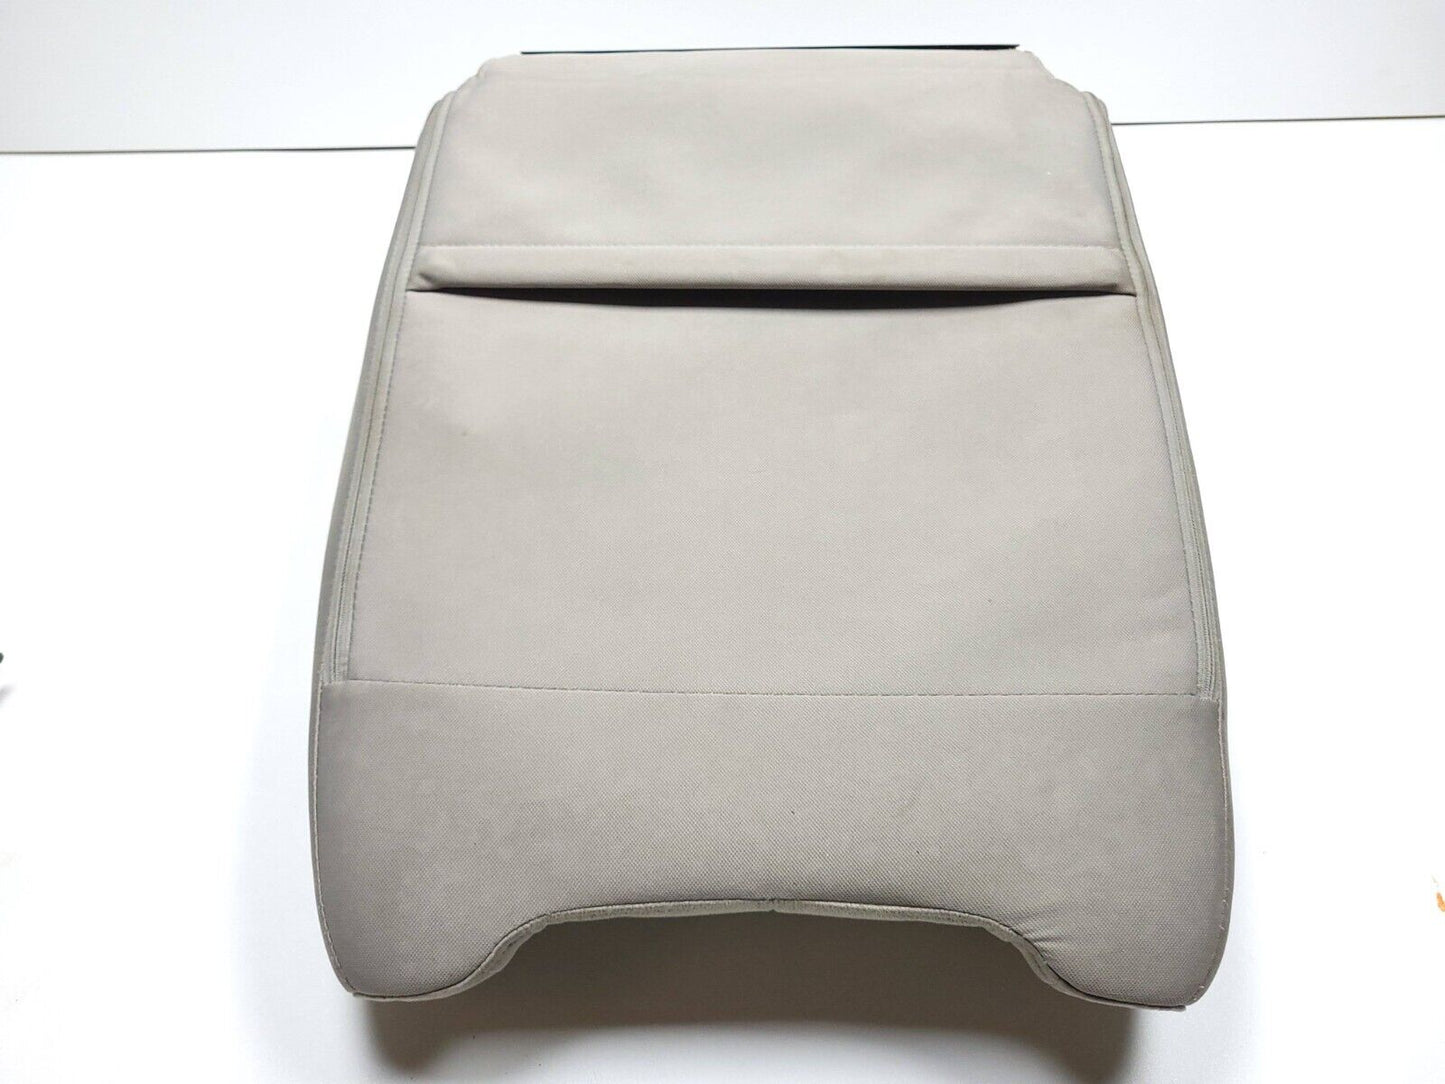 2007 - 2009 Mazda Cx-7 Seat Upper Cushion Front Passenger Right OEM